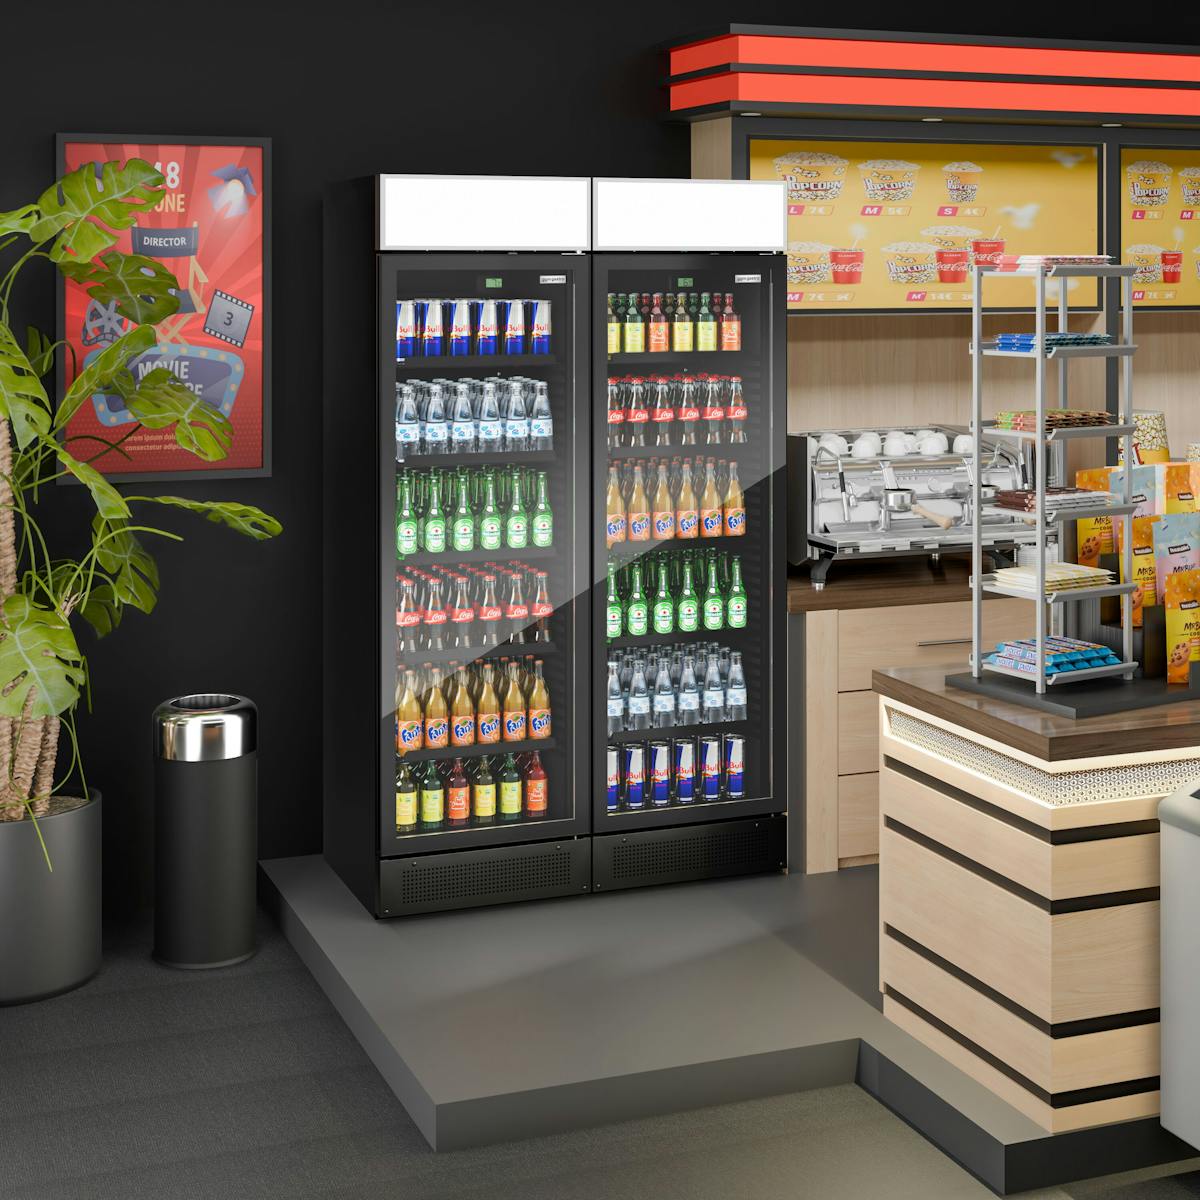 (2 units) Beverage refrigerator - 690 litres - frameless design - with advertising display